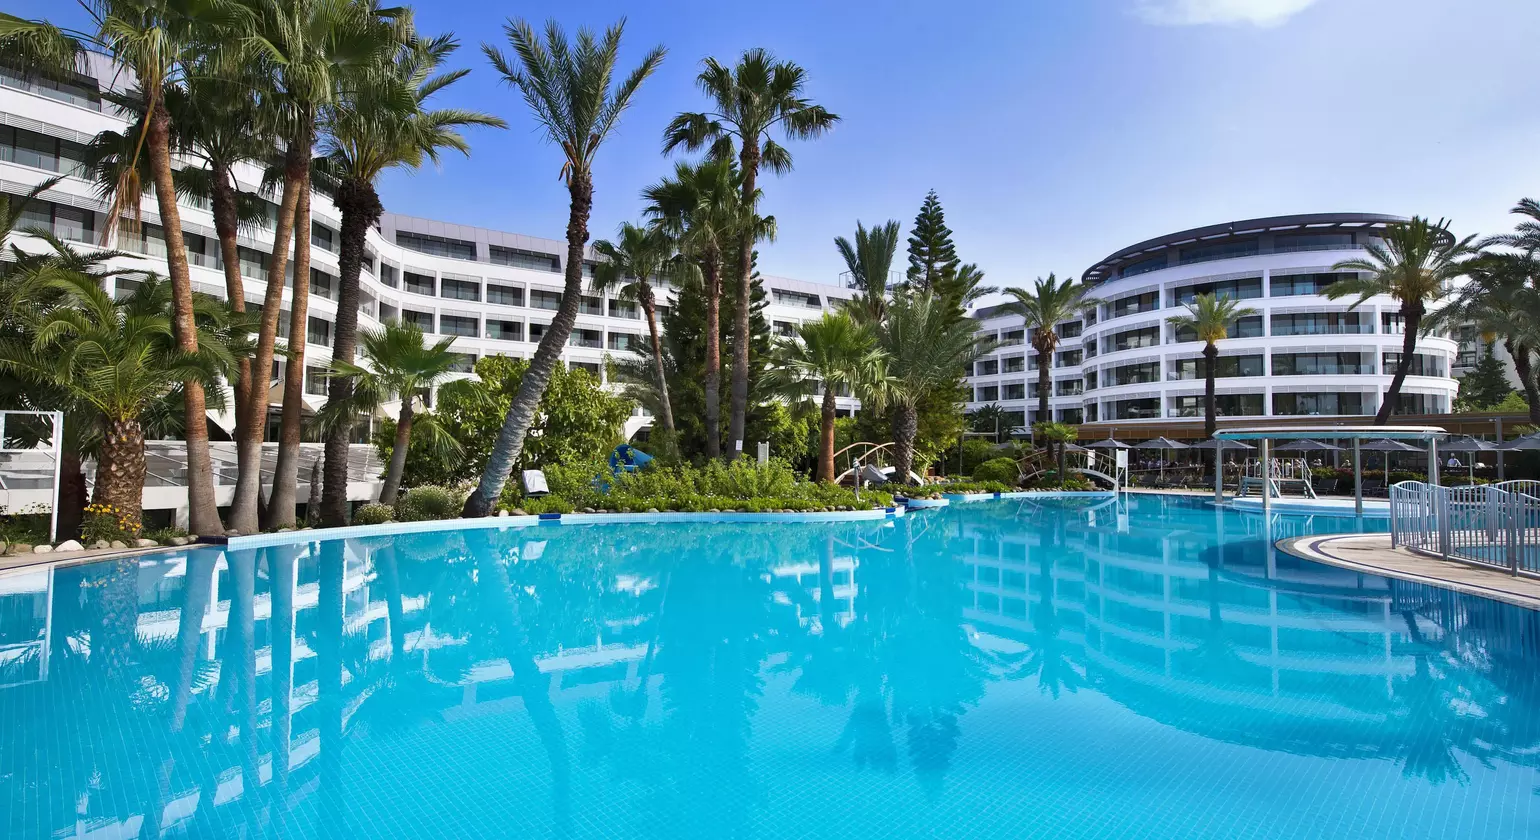 D-Resort Grand Azur Marmaris